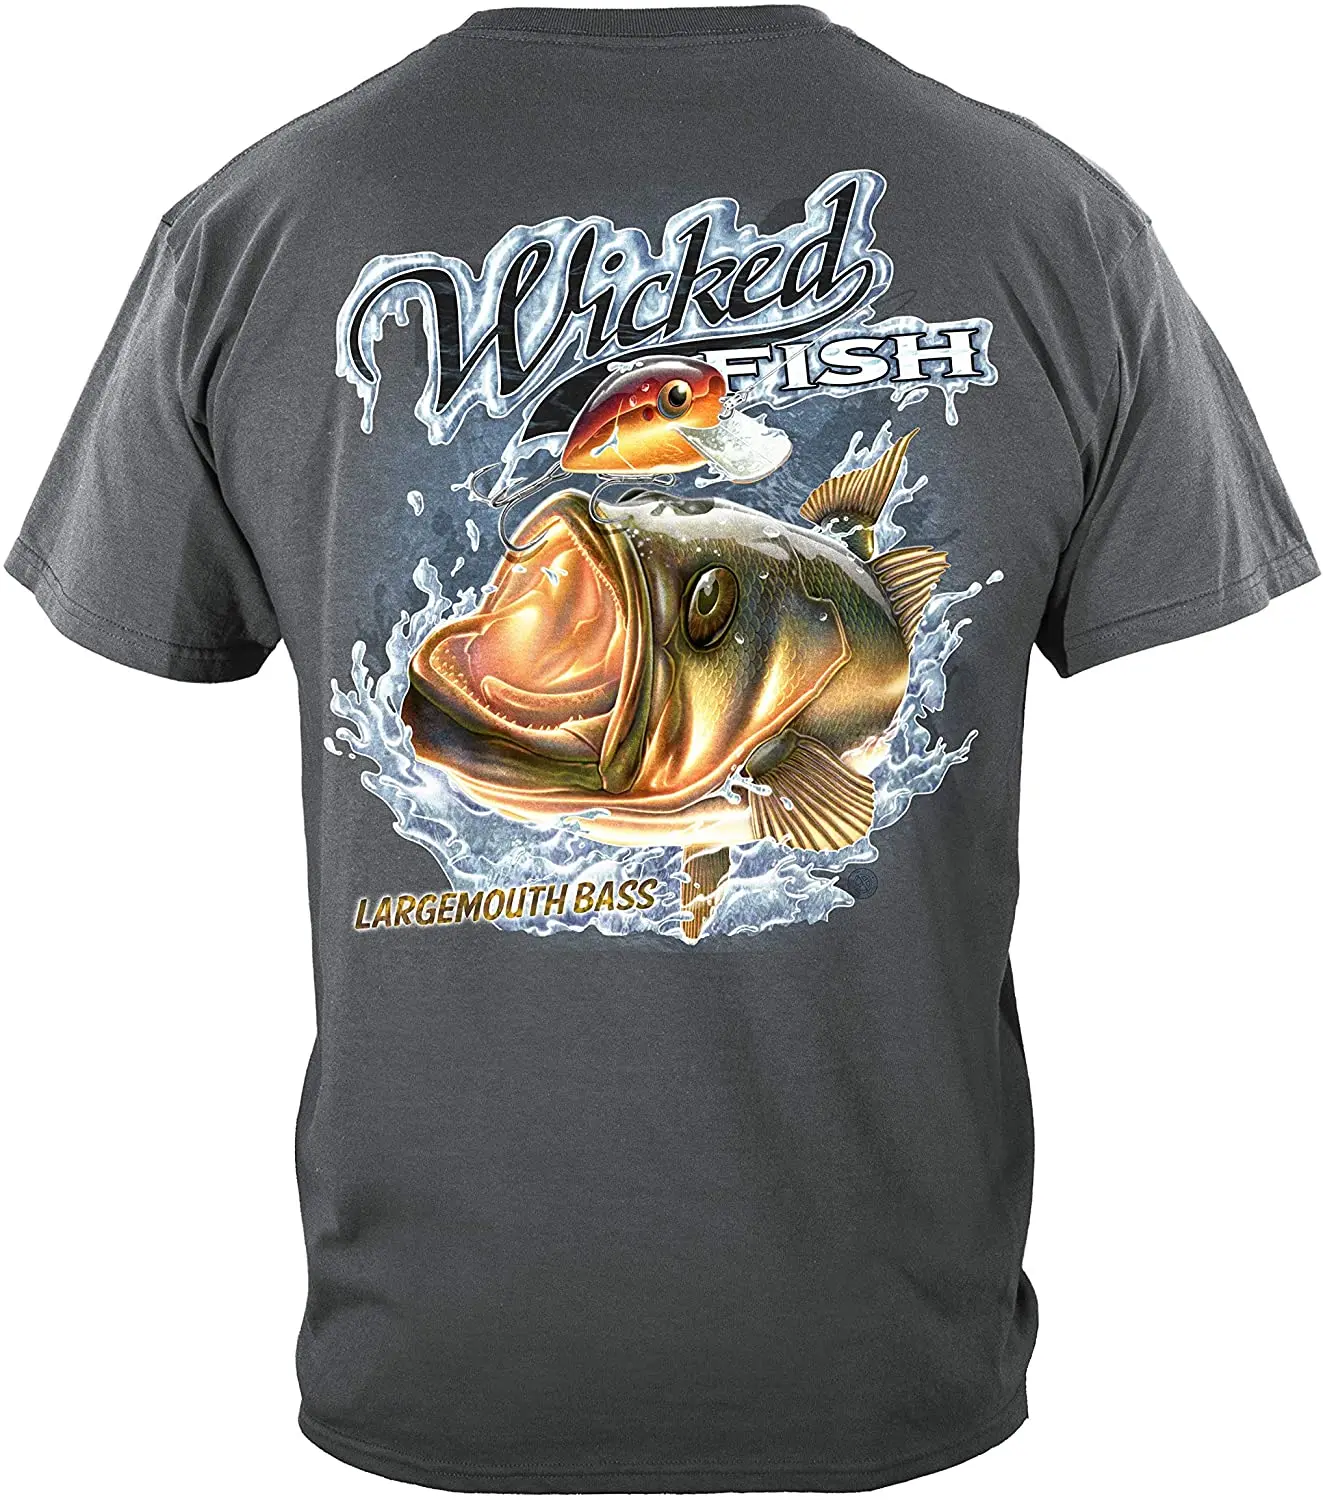 

Fishing Men T-Shirt Wicked Fish Large Mouth Bass SHORT Casual COTTON O-Neck harajuku shirt